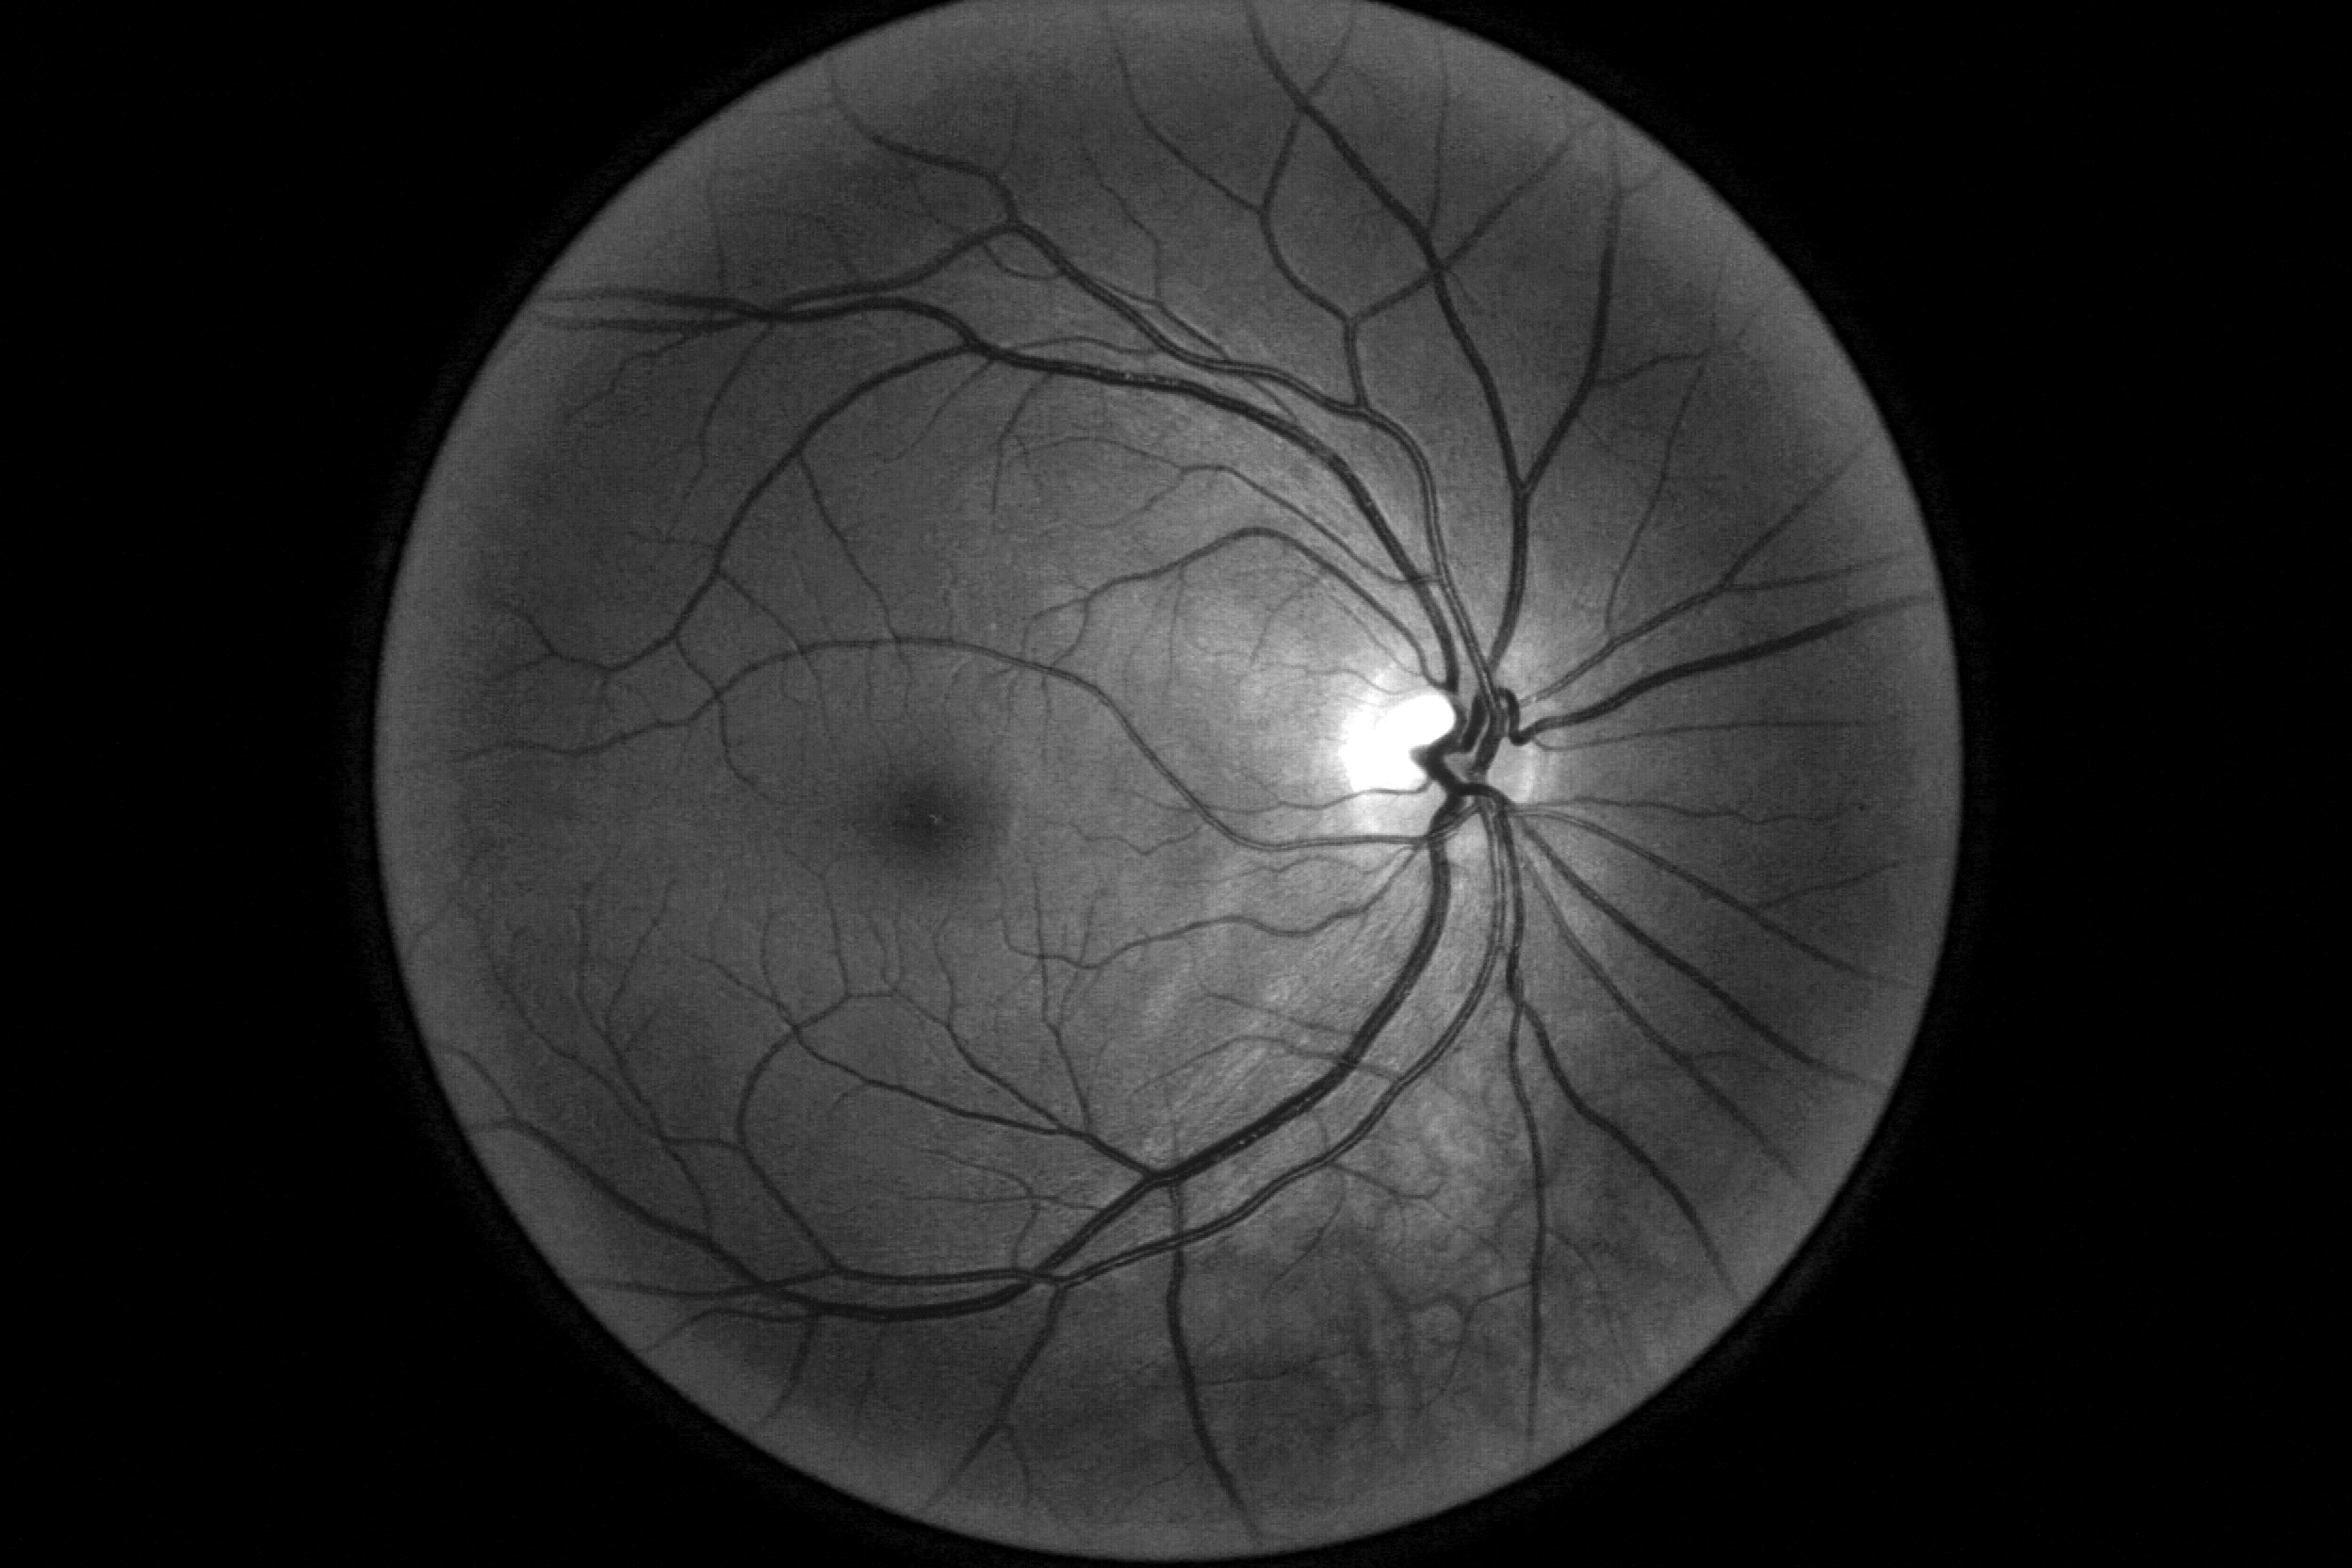 fundus camera image of retina